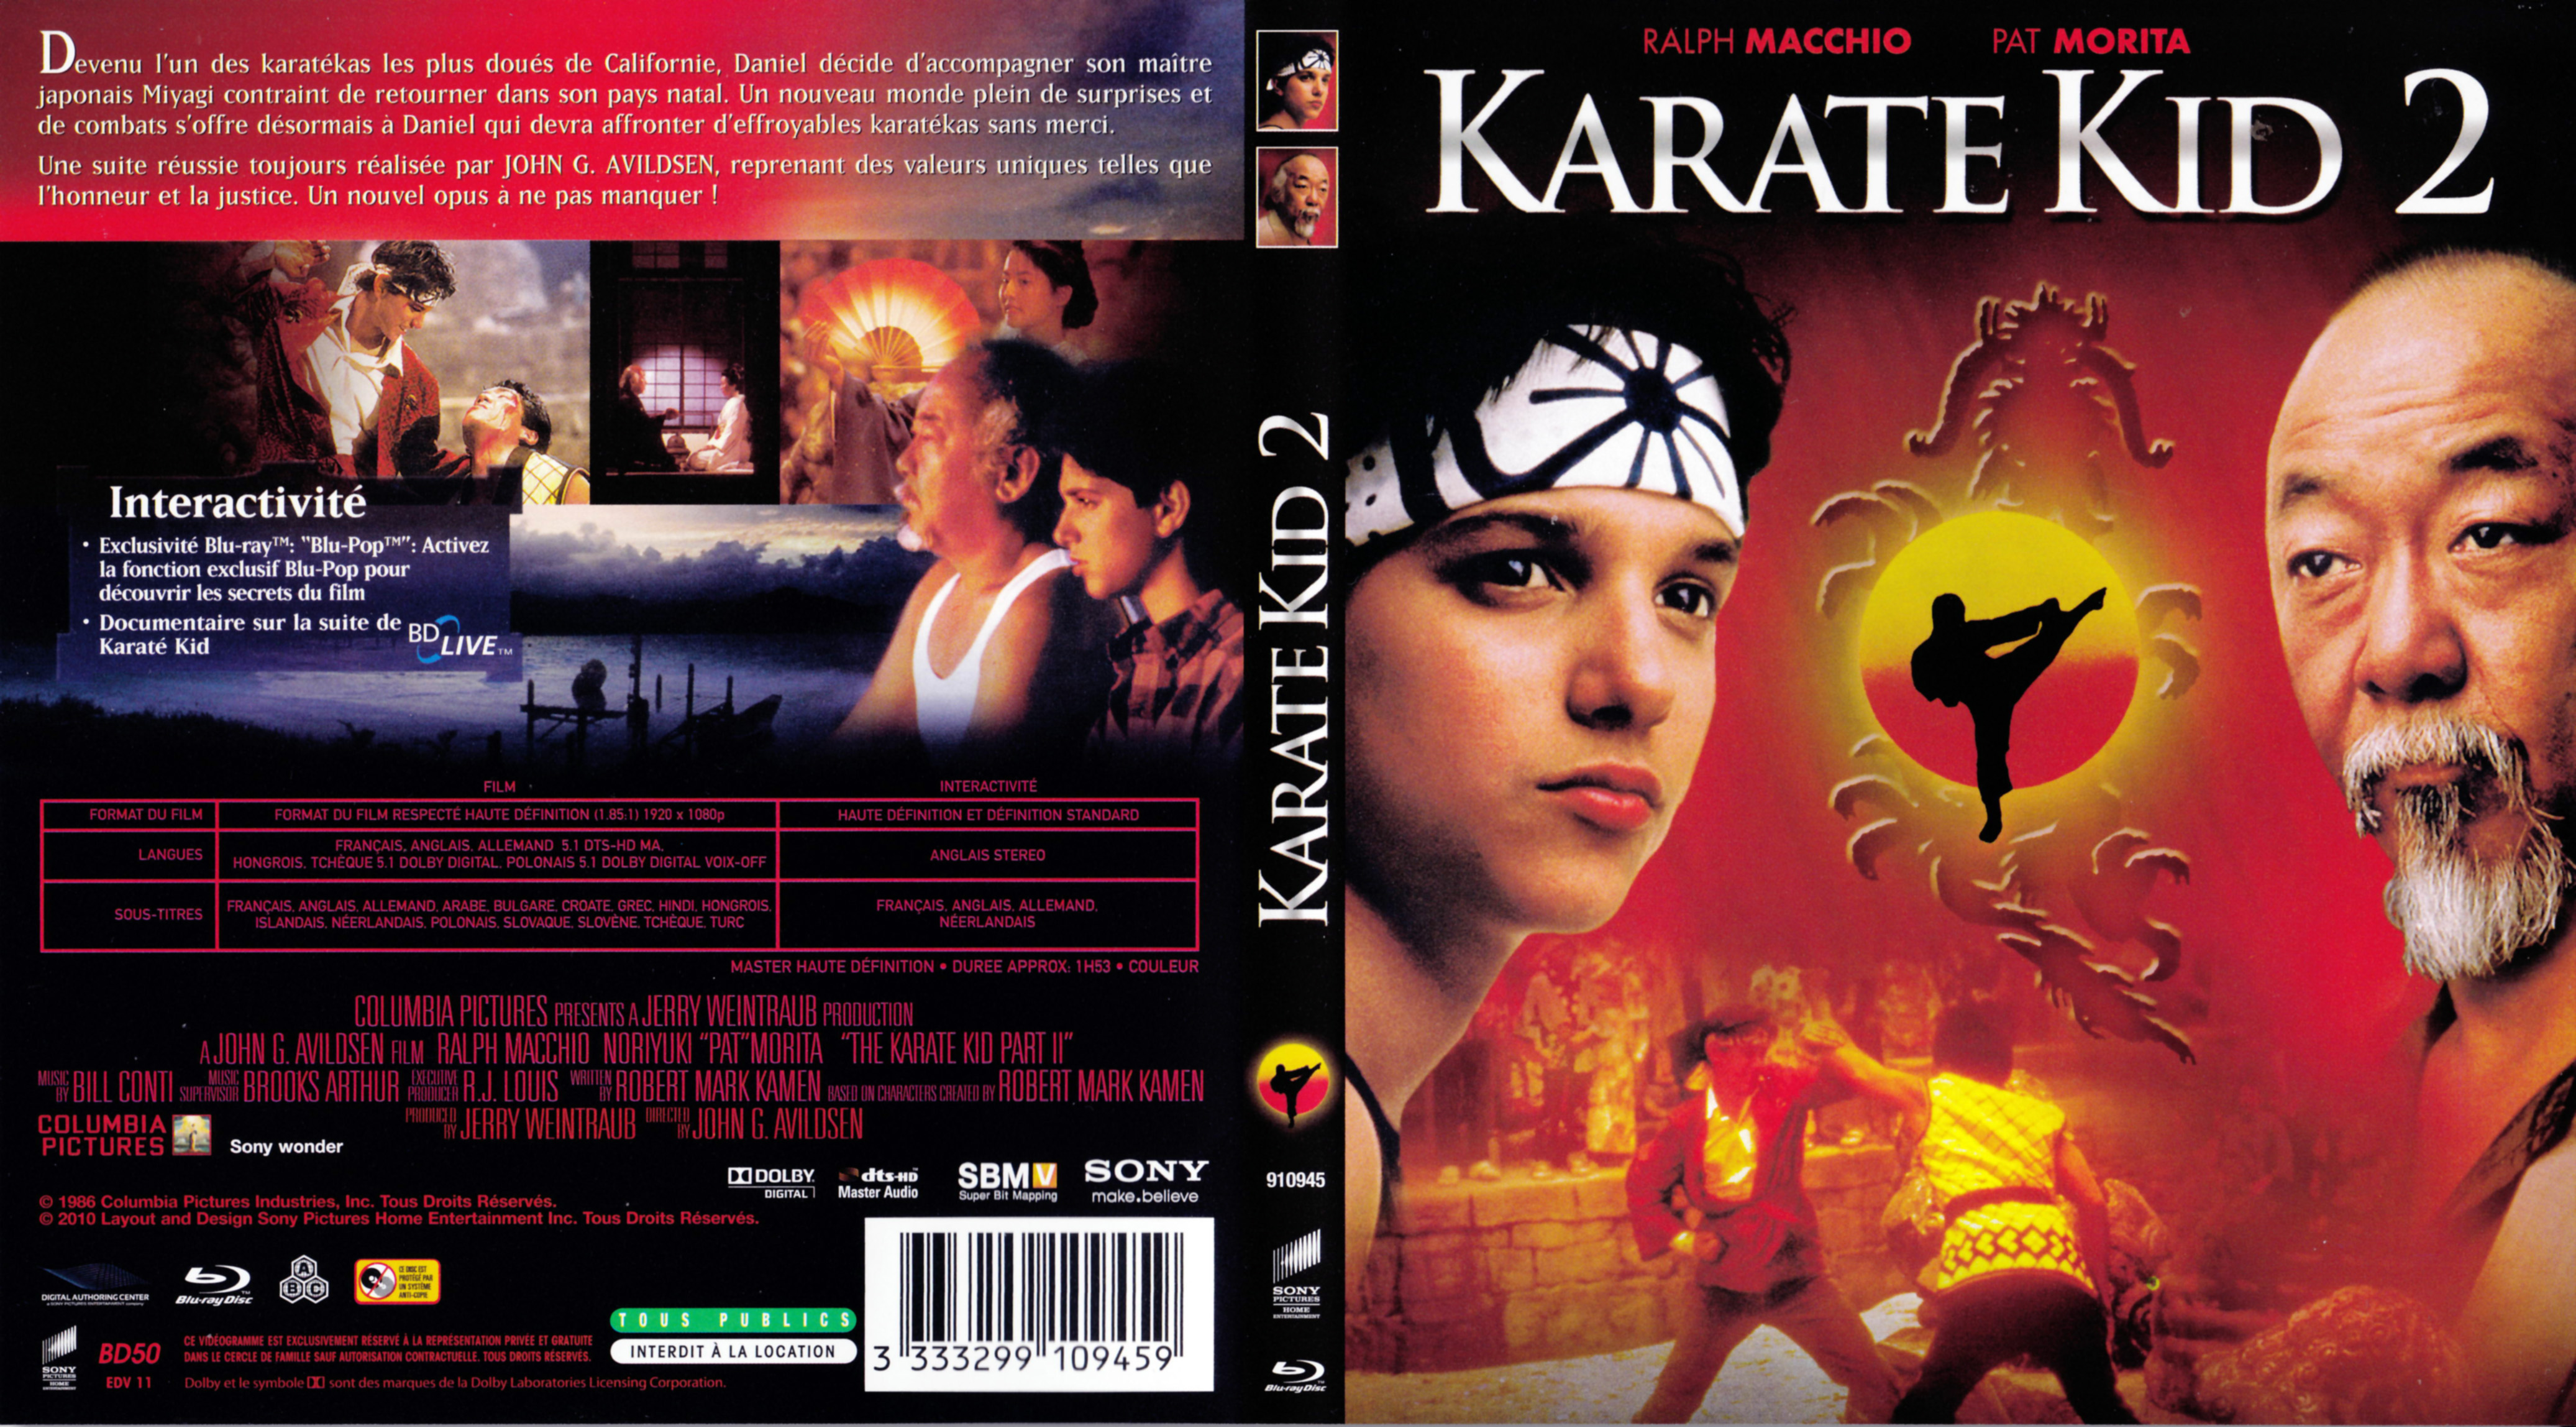 Jaquette DVD Karate kid 2 (BLU-RAY)